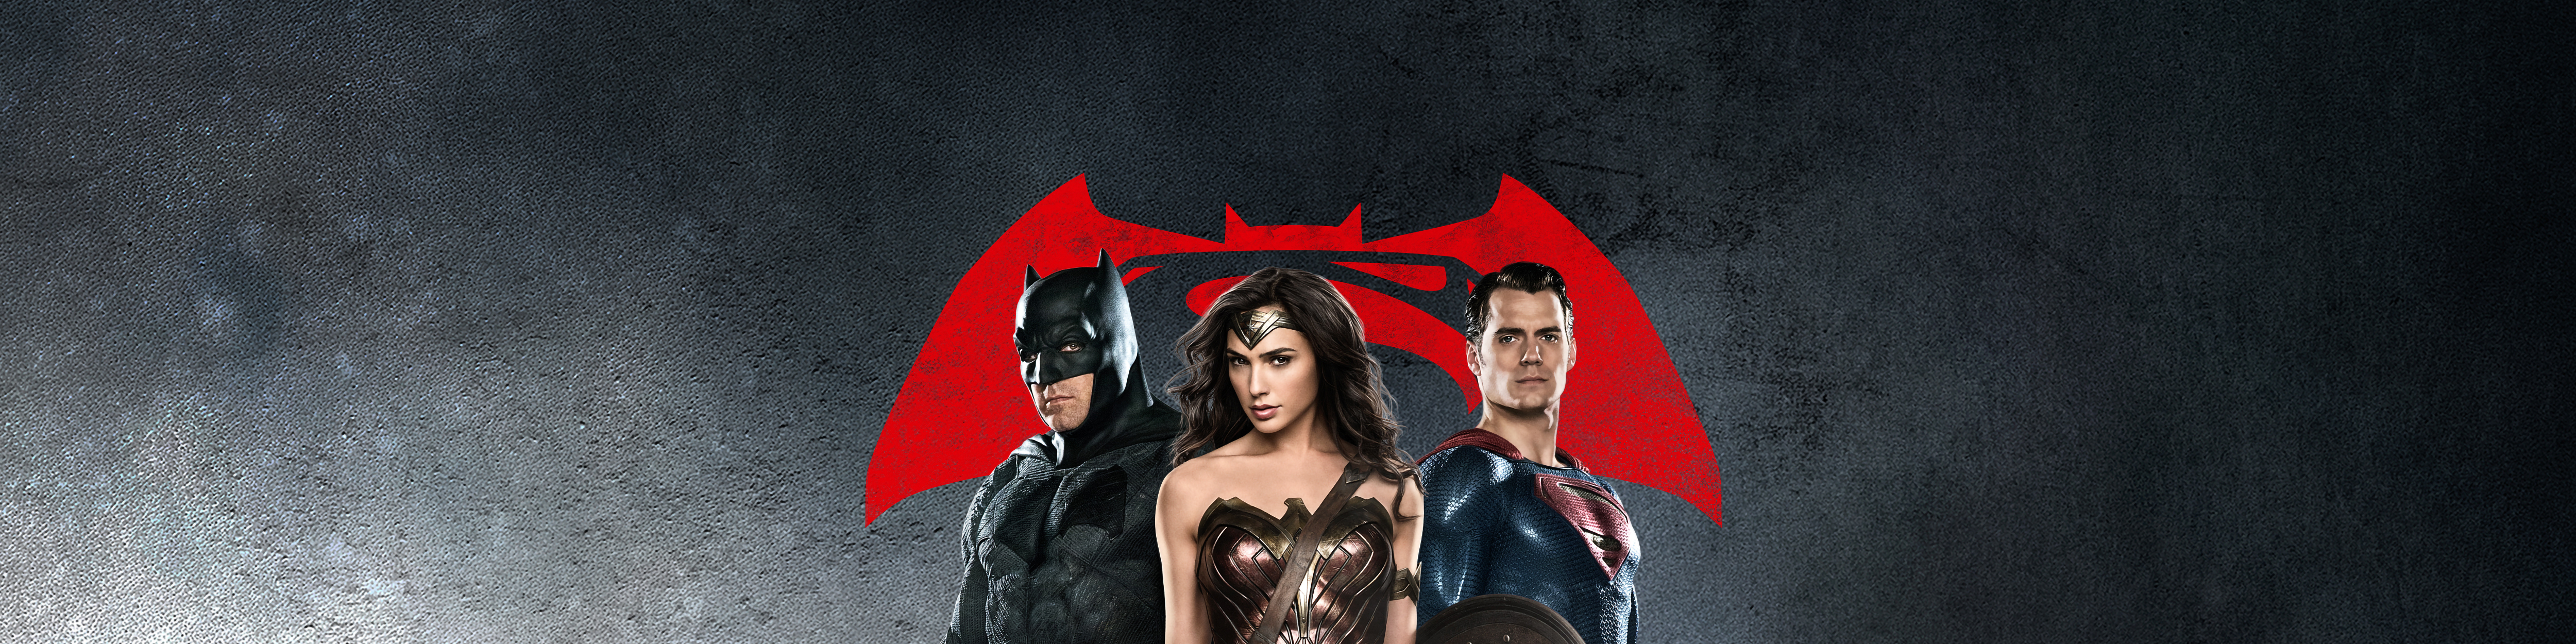 Descarga gratuita de fondo de pantalla para móvil de Superhombre, Películas, Dc Comics, Hombre Murciélago, La Mujer Maravilla, Batman V Superman: El Amanecer De La Justicia.